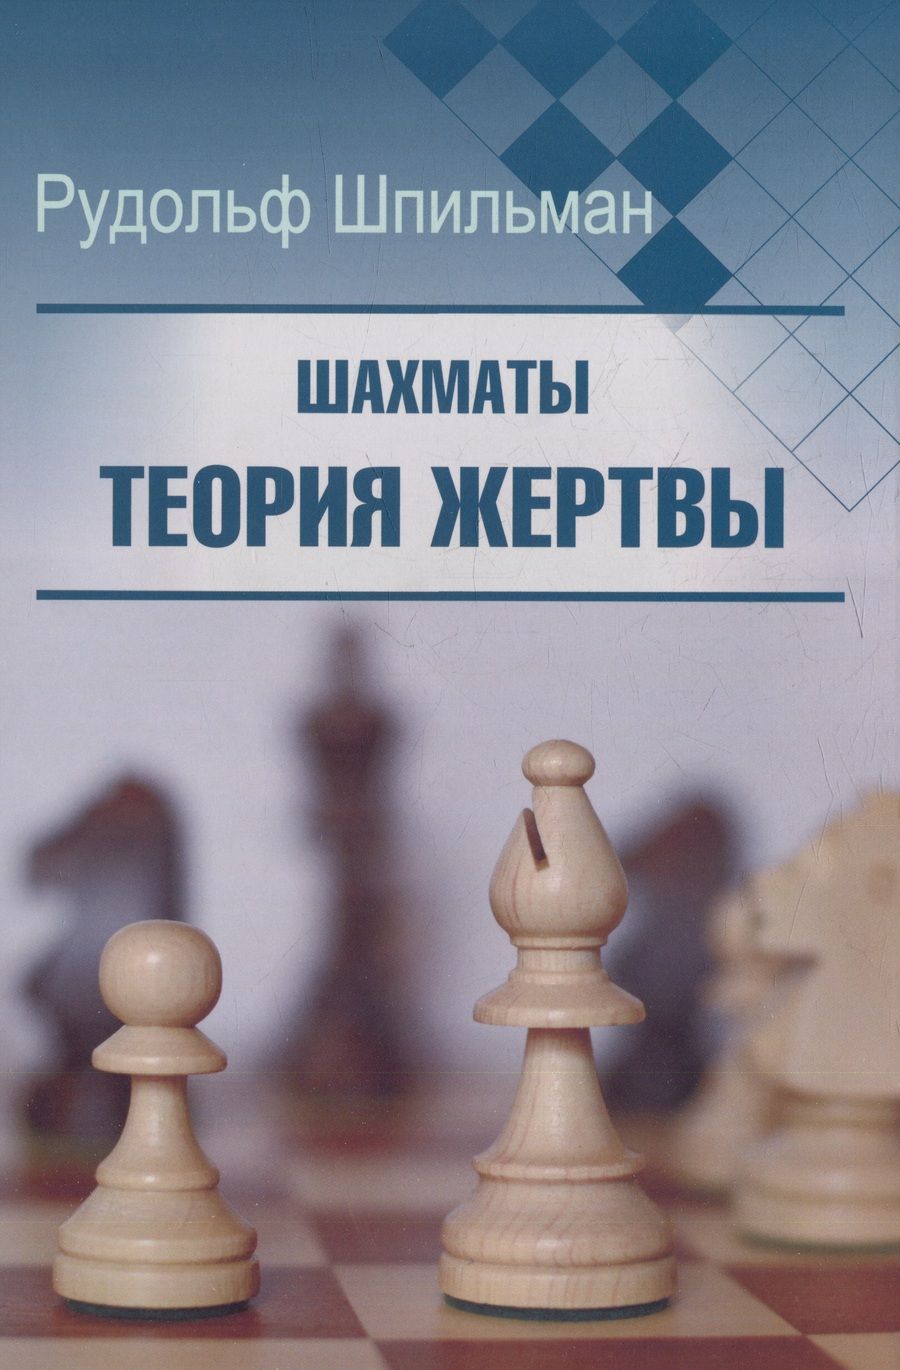 Обложка книги "Шпильман: Шахматы. Теория жертвы"